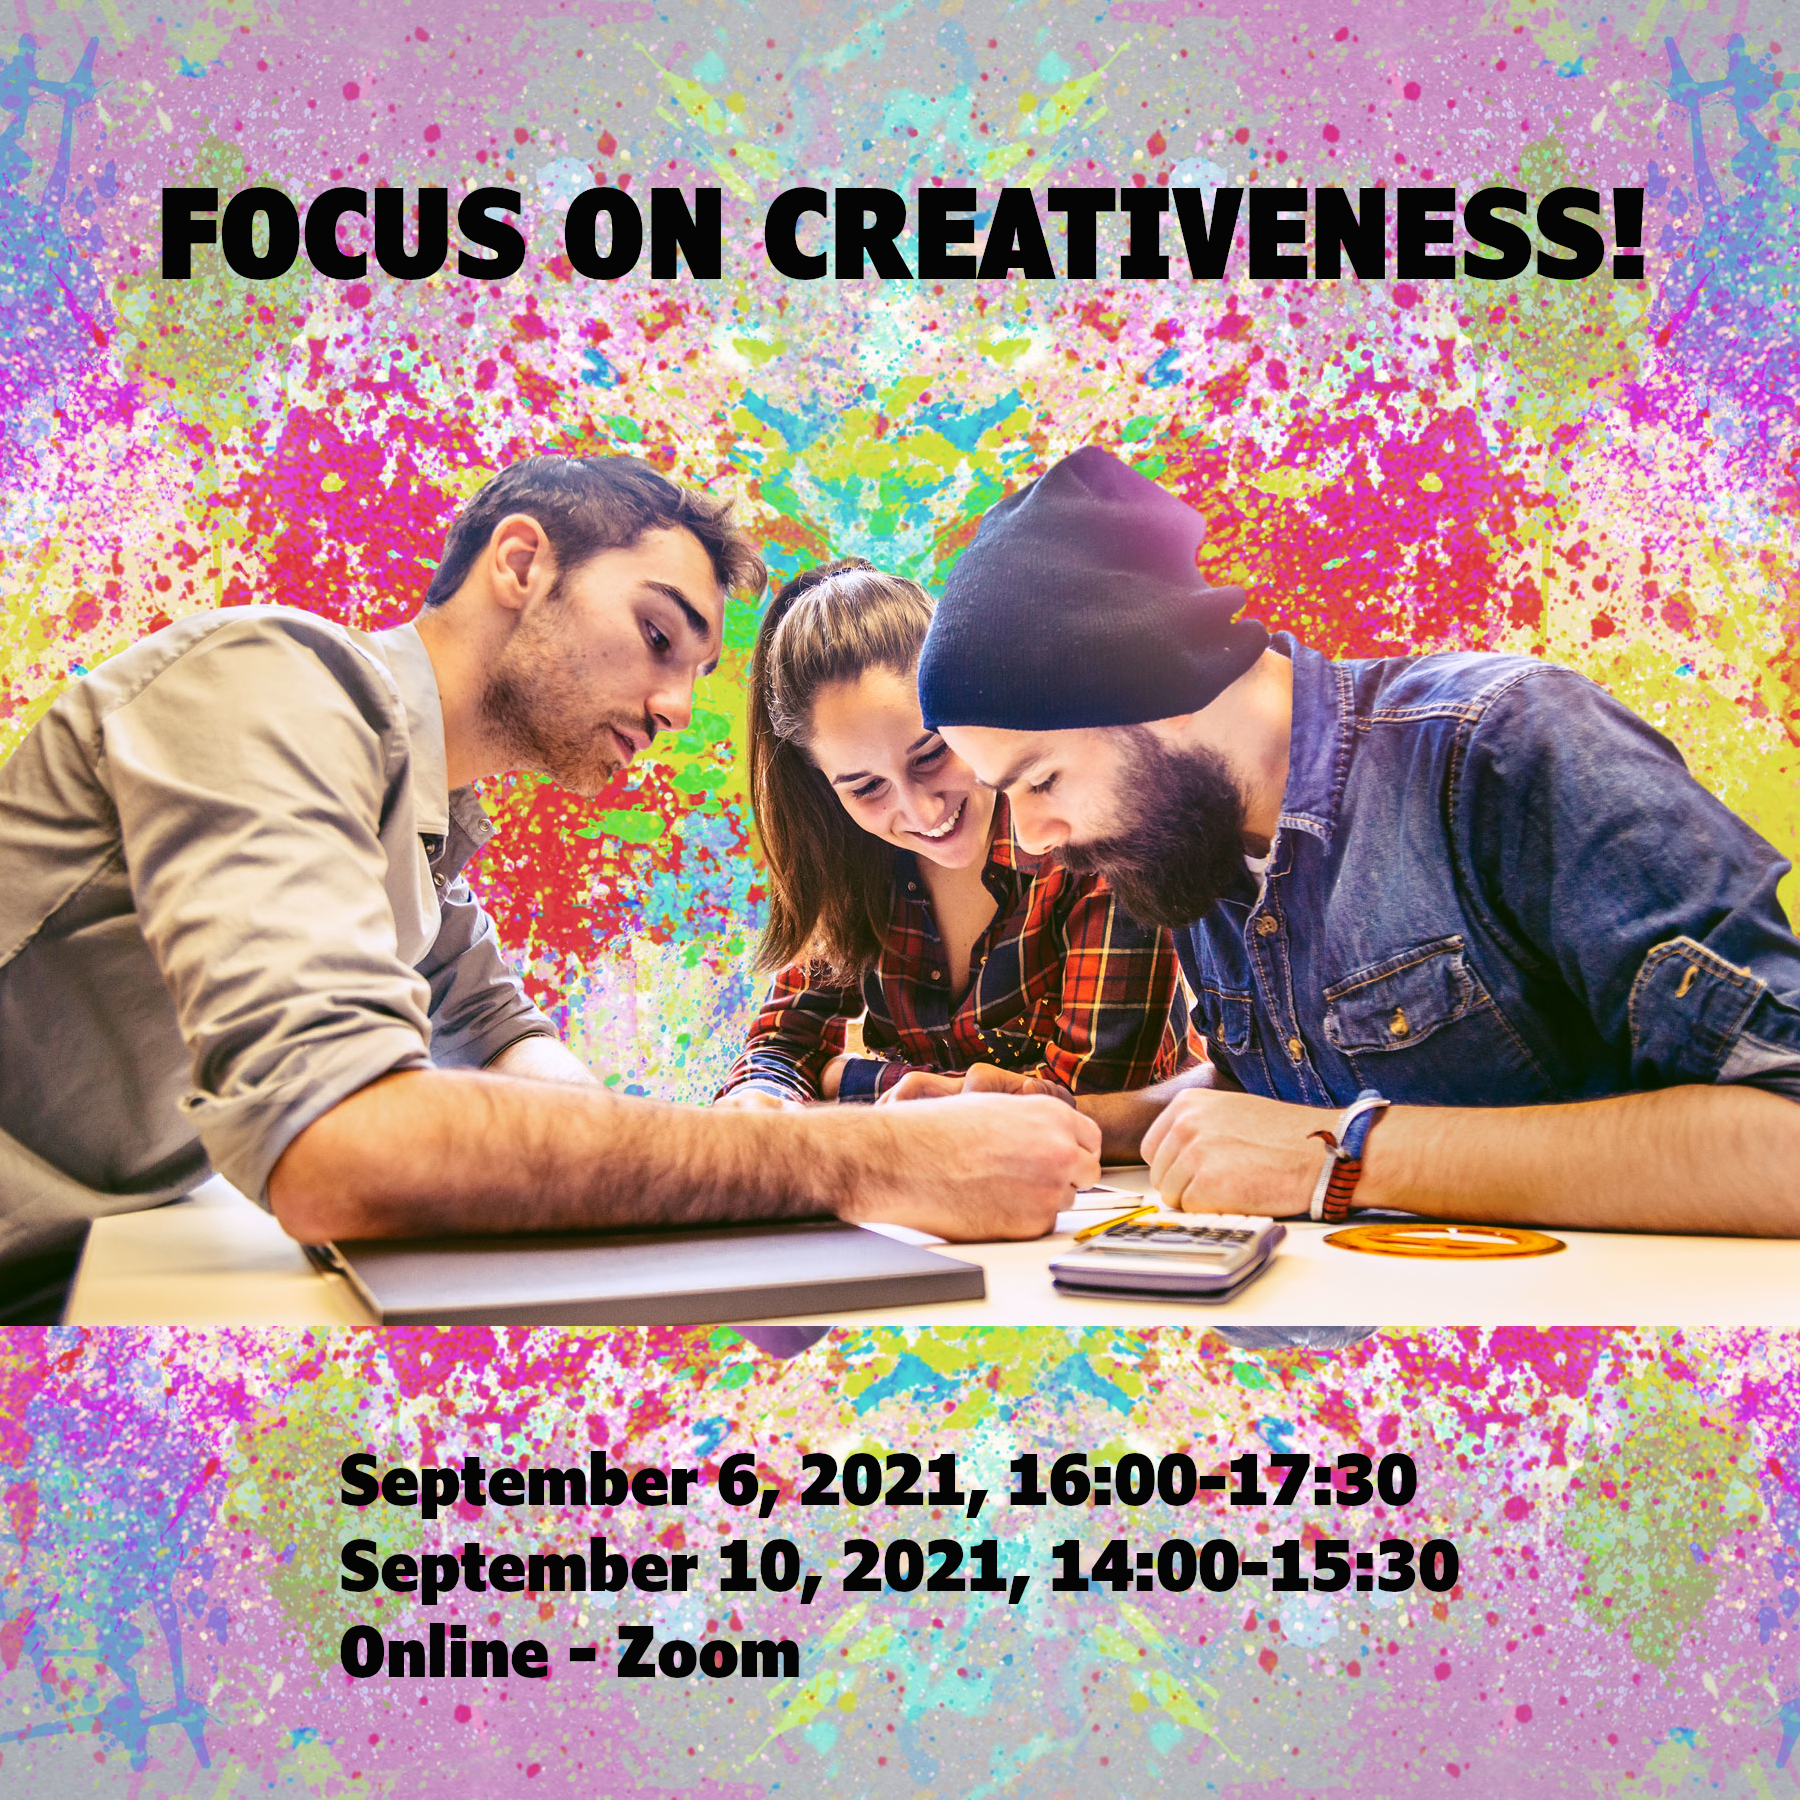 Focus on creativeness! - online